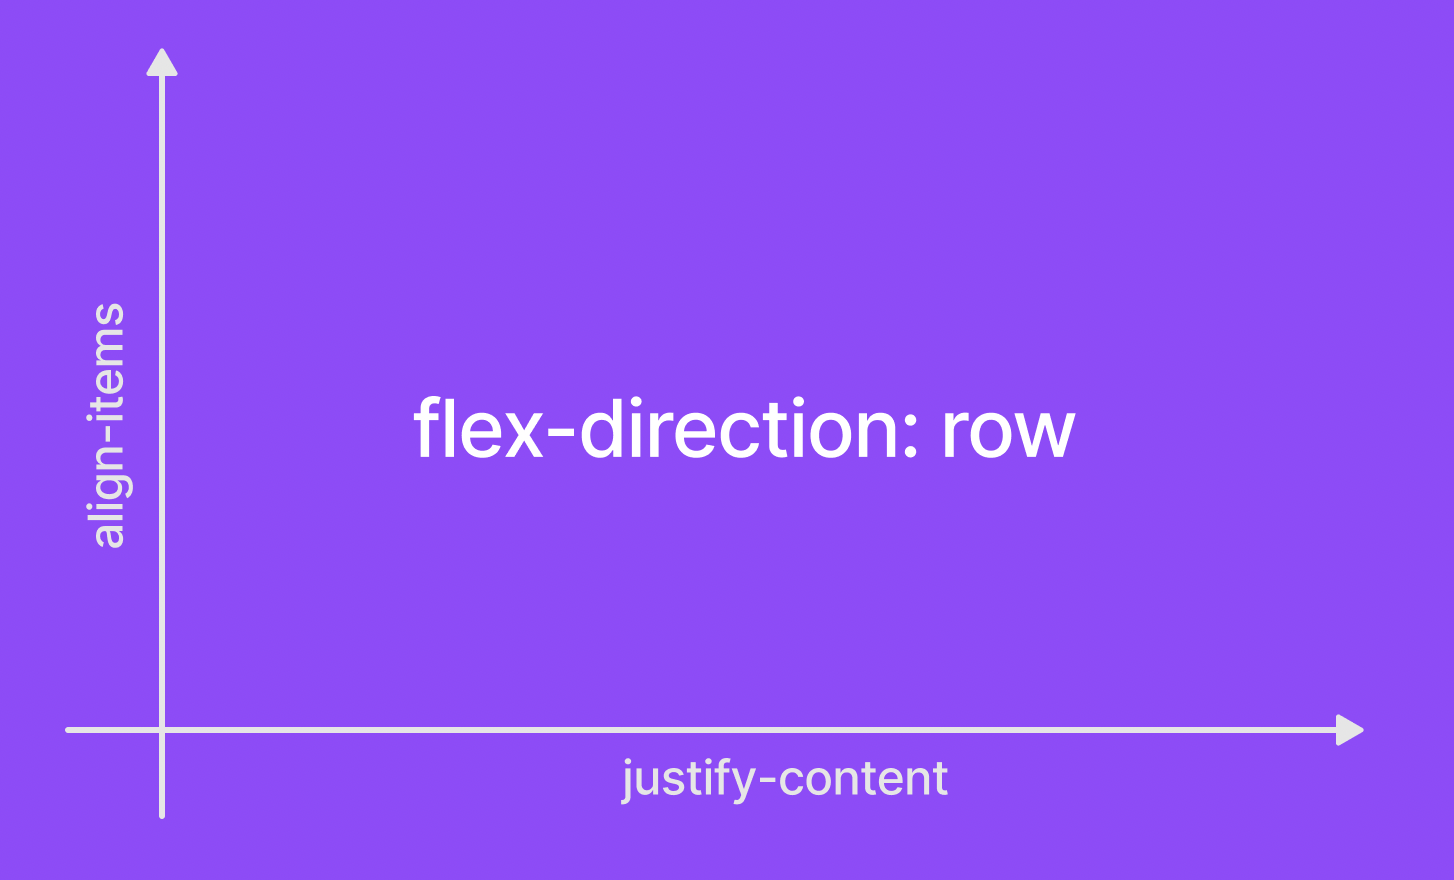 Image of flex-direction row